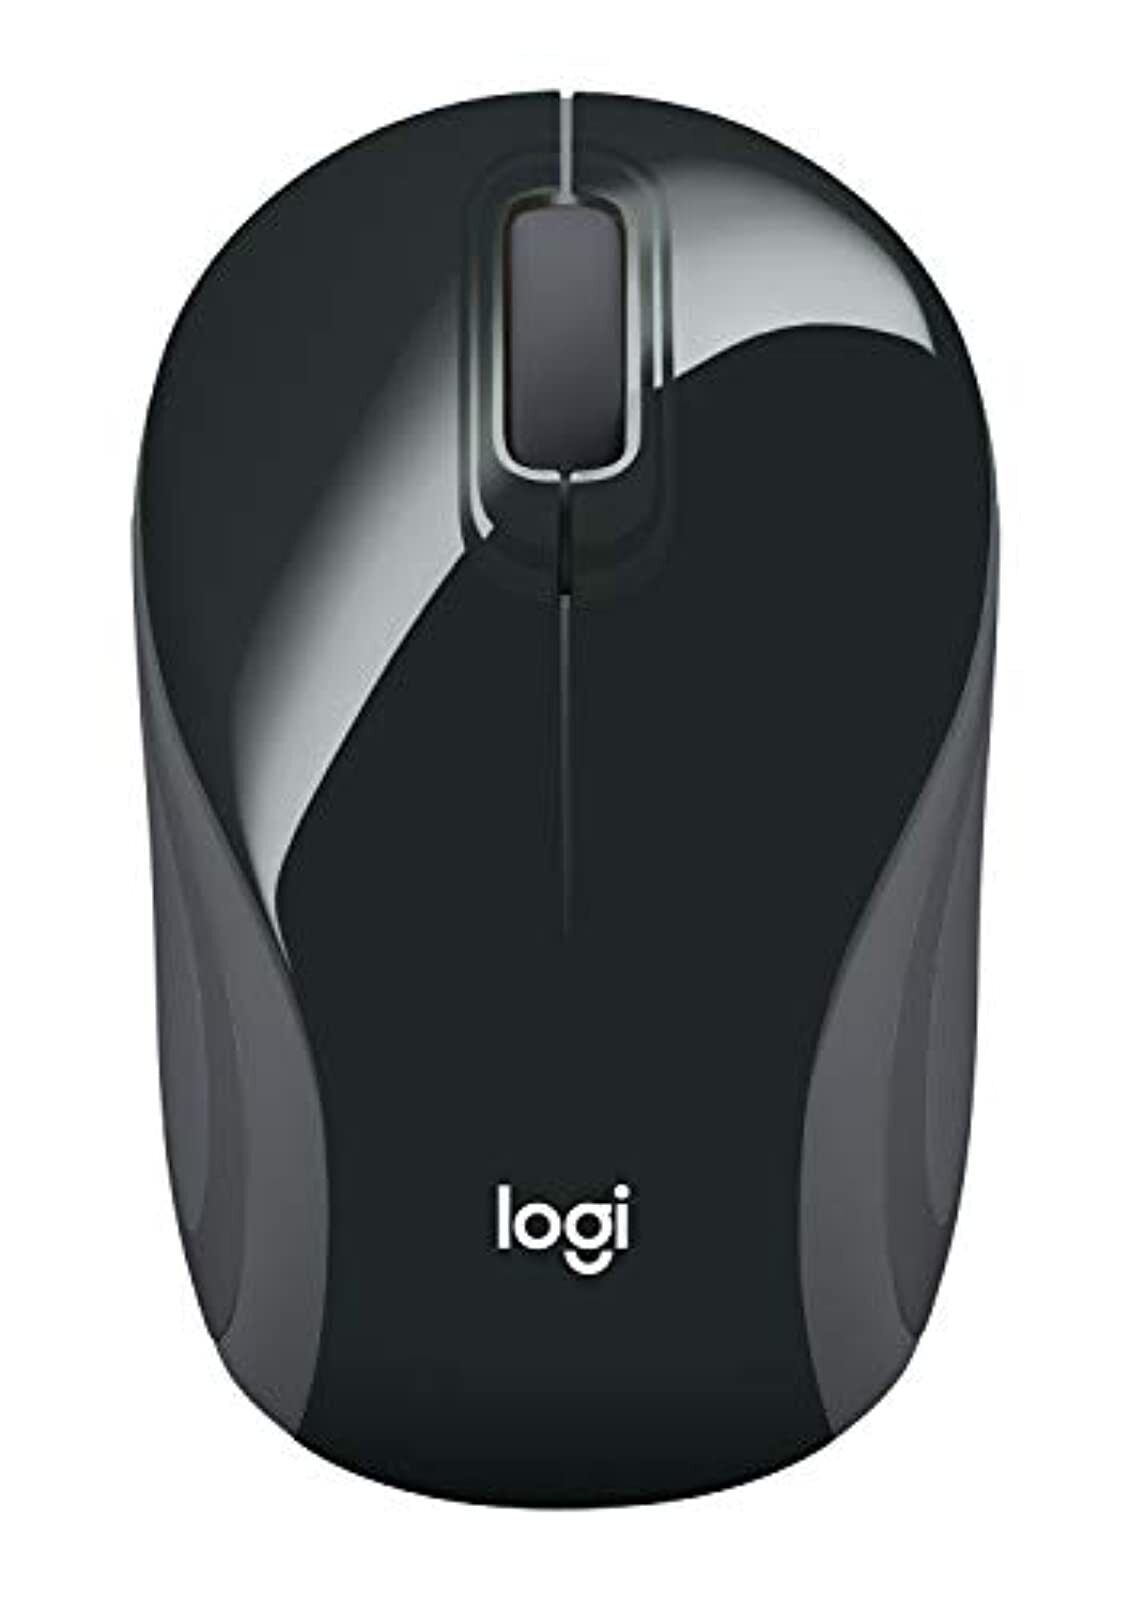 Logitech Wireless Mini Mouse M187 Pocket Sized Portable Mouse For Laptops